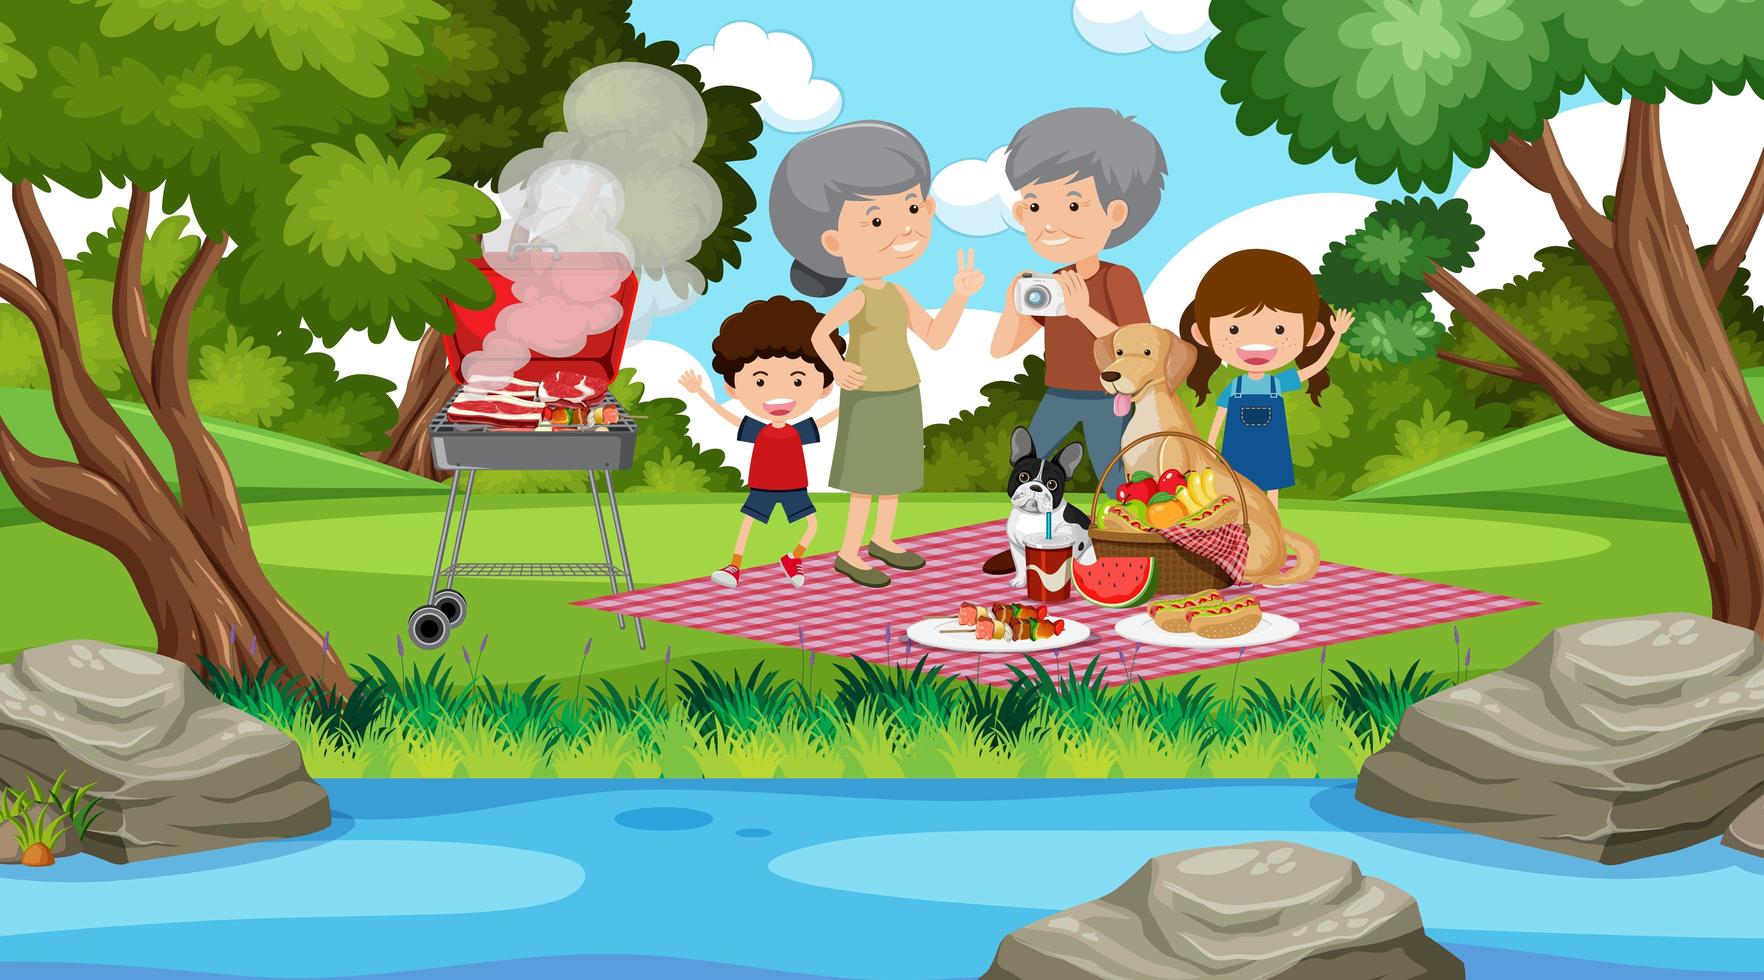 Picnic scene with happy family in the garden vector